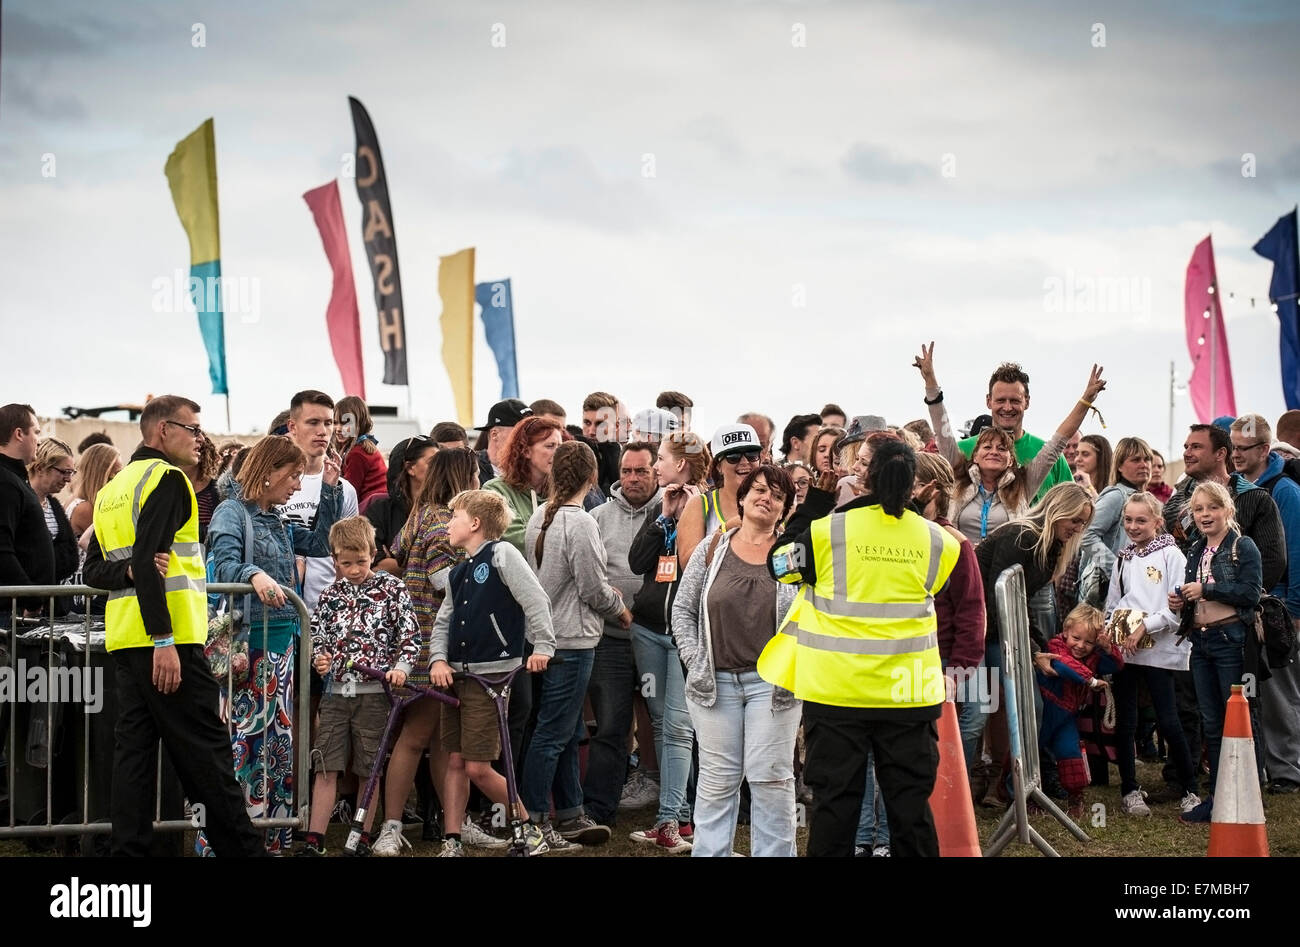 Festivalgoers in attesa all'ingresso al Festival Brownstock in Essex. Foto Stock